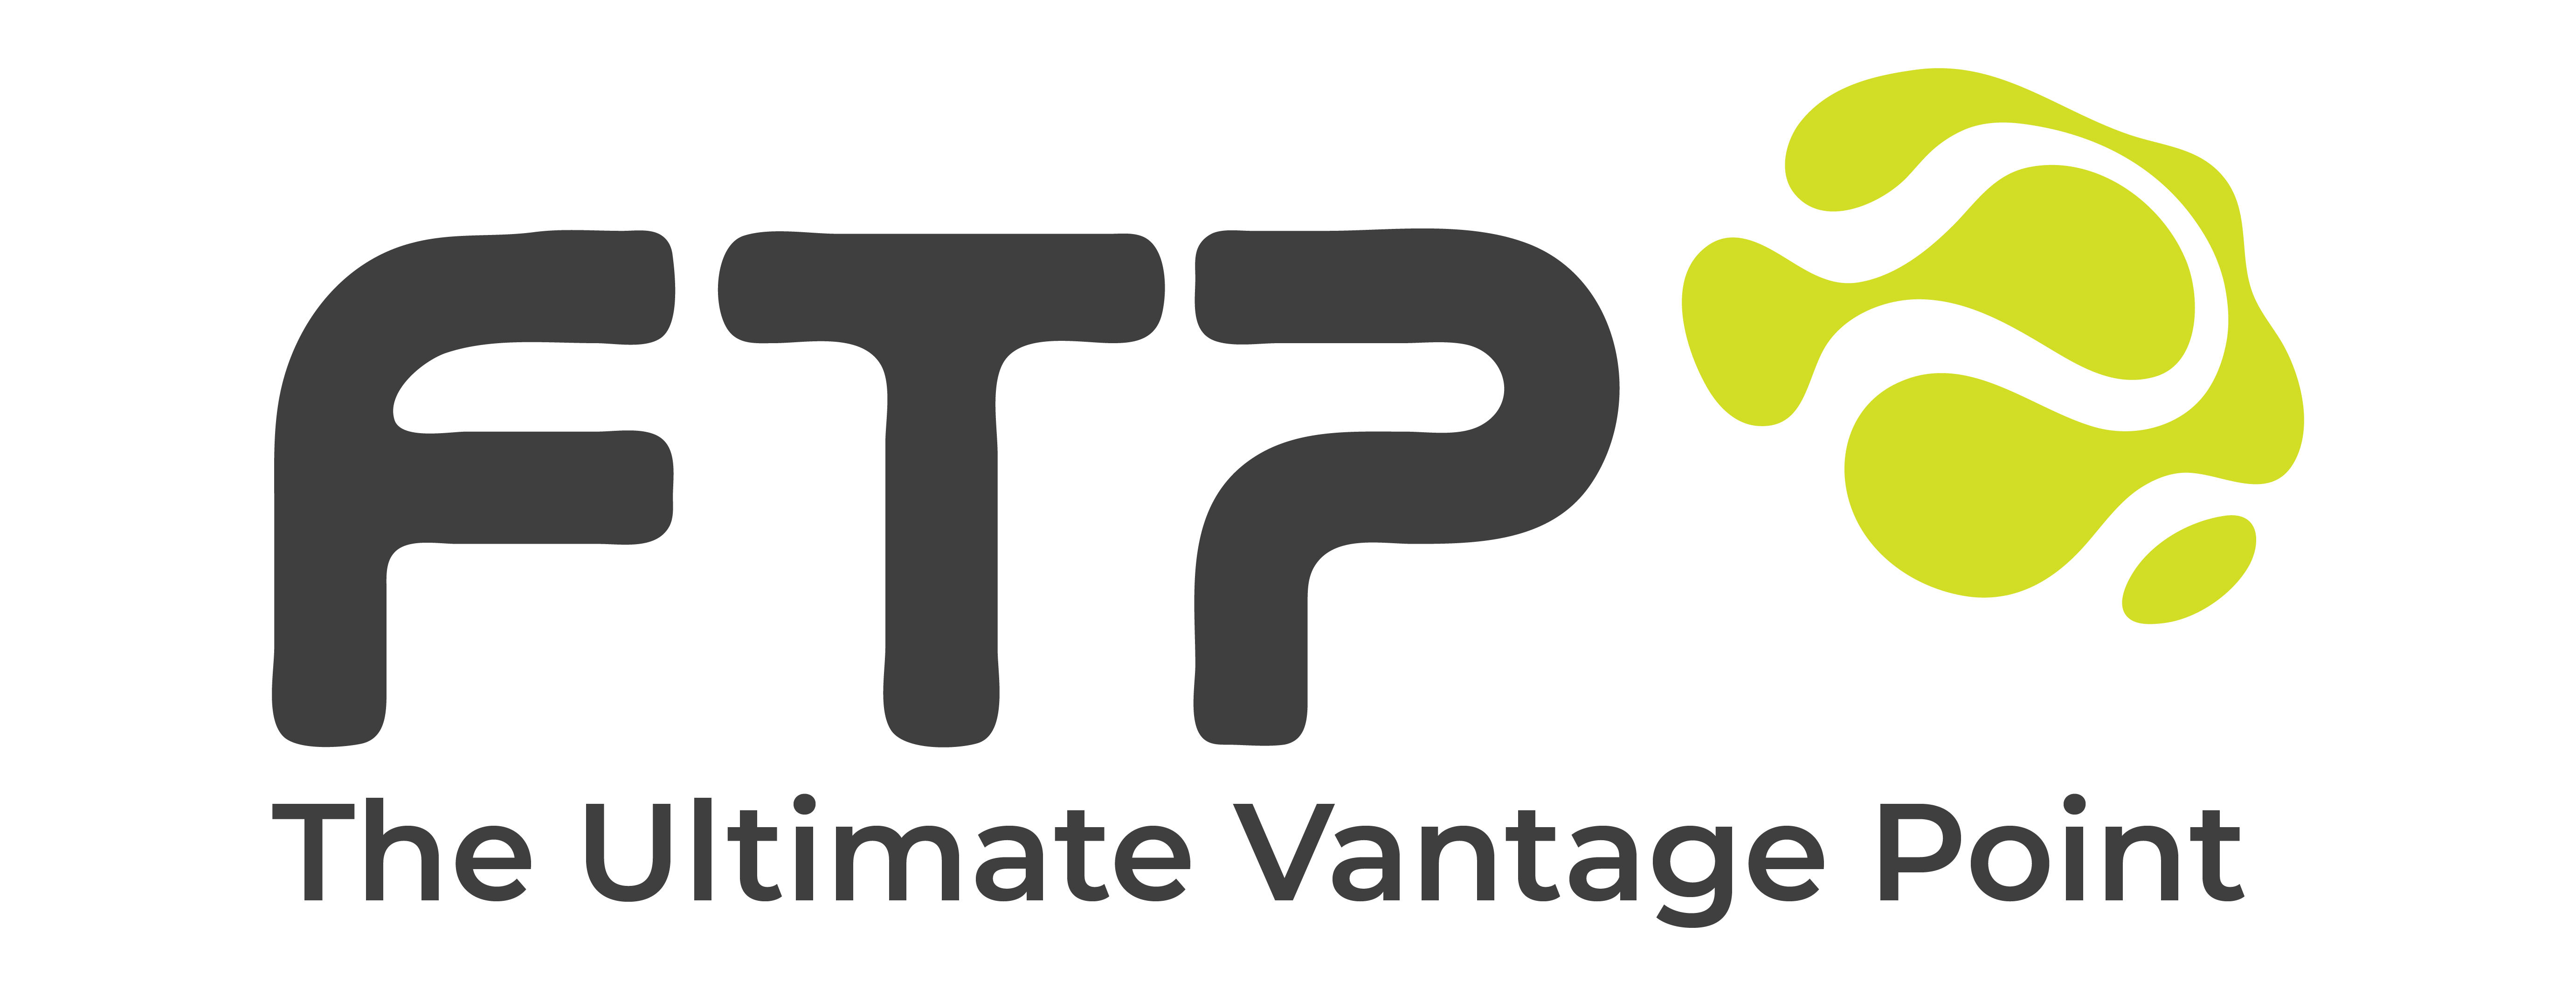 ftp solutions logo